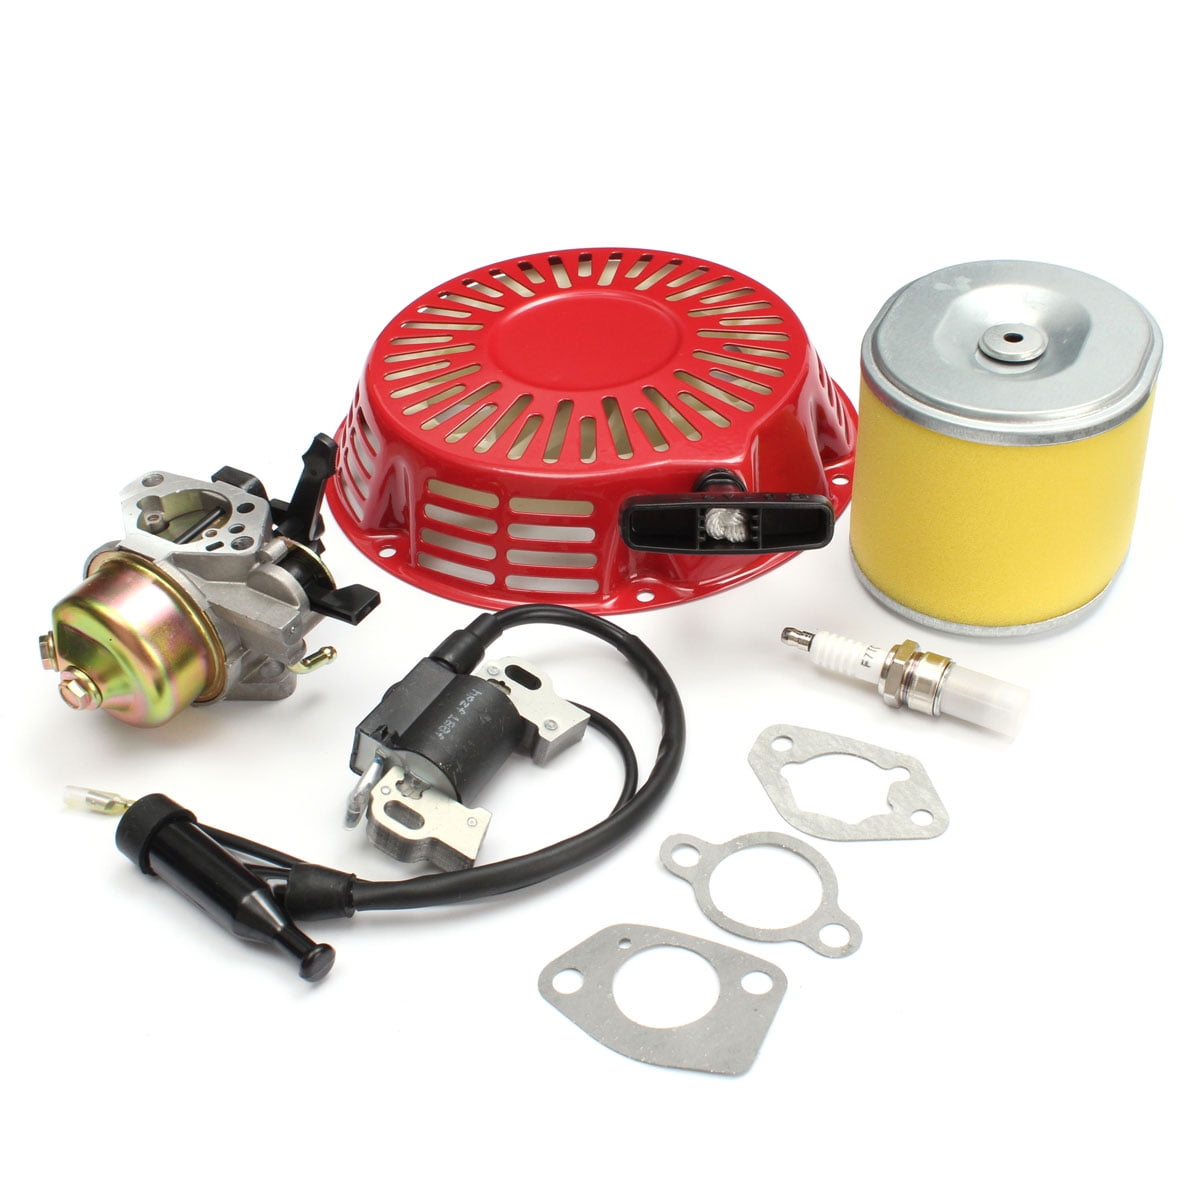 Kit for Honda GX340 GX390 11HP 13HP Engine Carburetor Recoil Starter Coil Filter